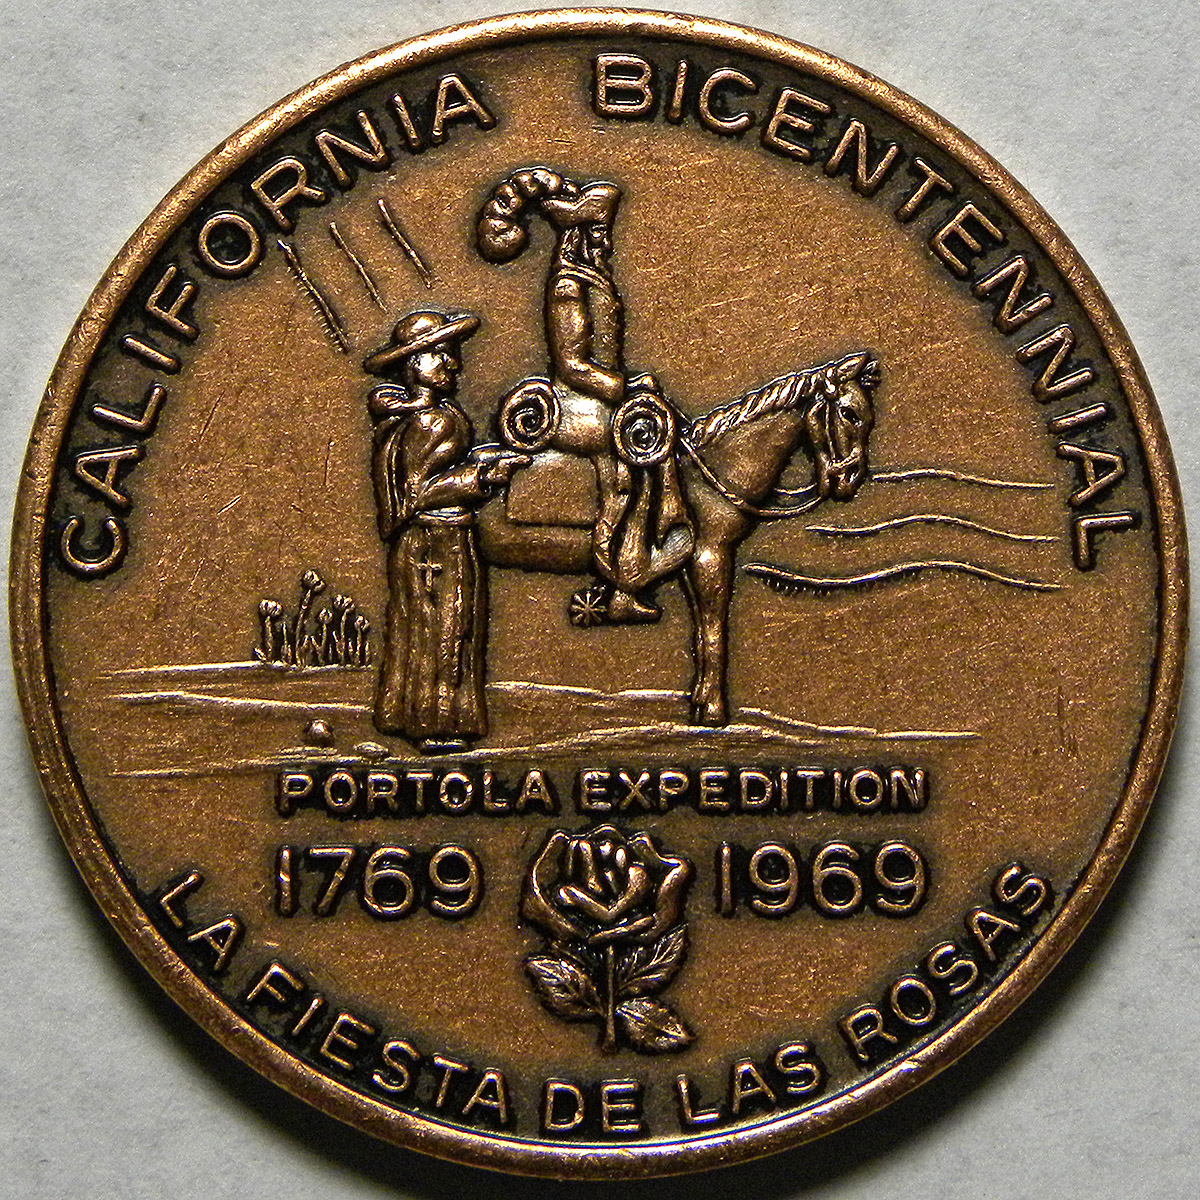 California bicentennial (1769-1969) - Portola Expedition medal (obverse)